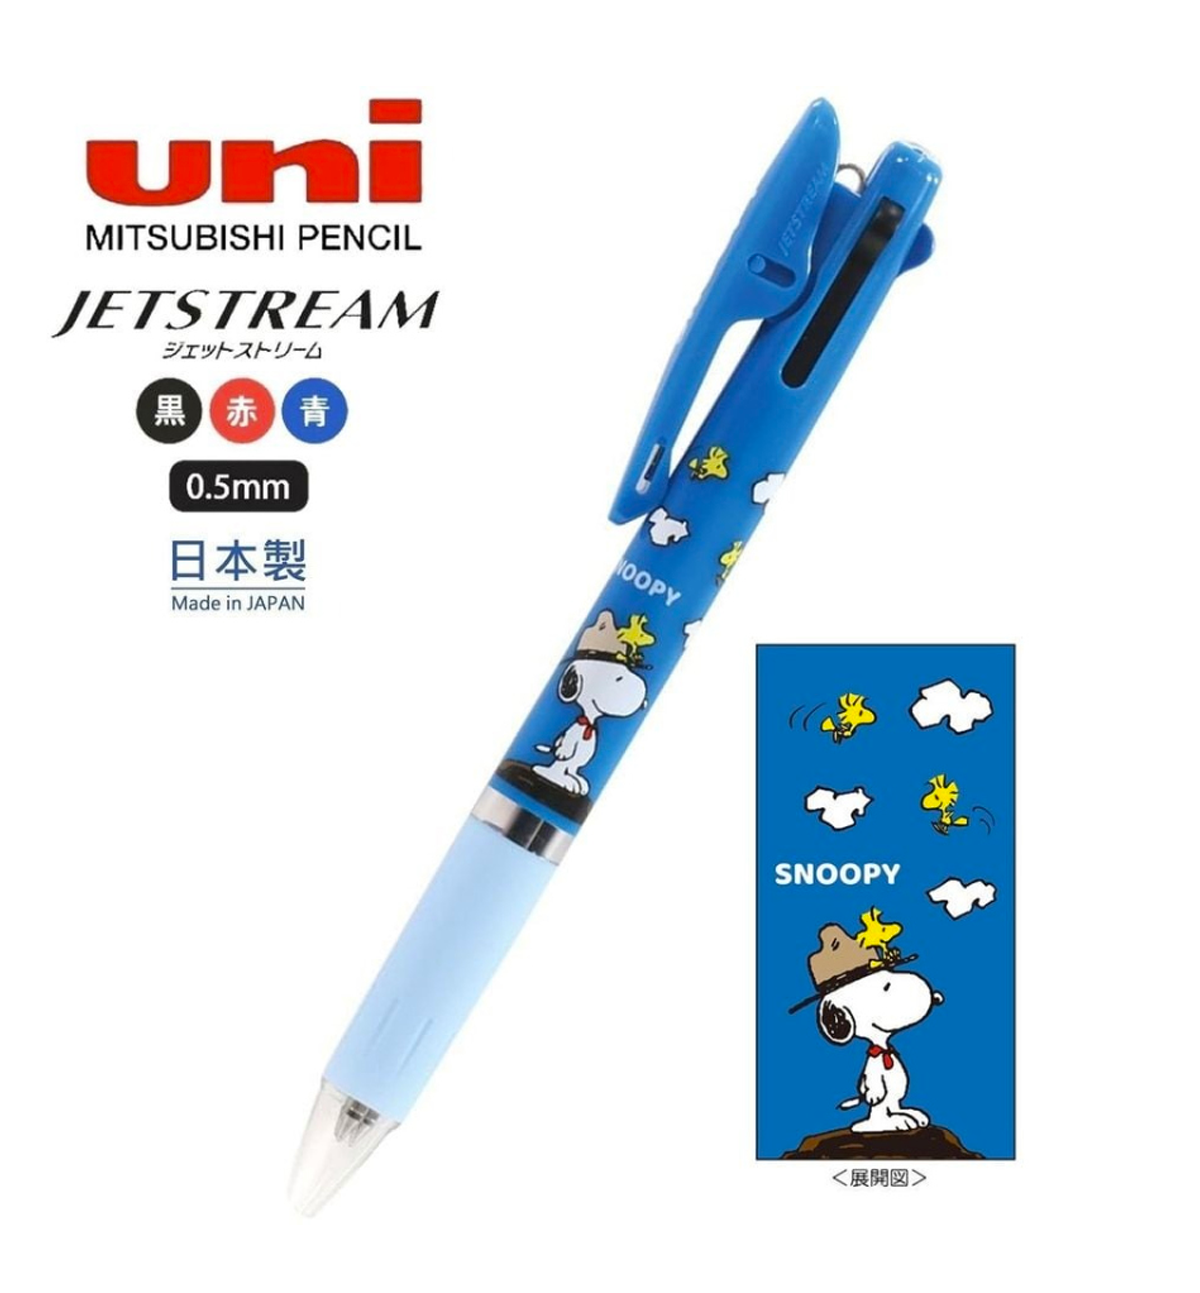 Peanuts Snoopy Jetstream 0.5mm Pen [Trekking]